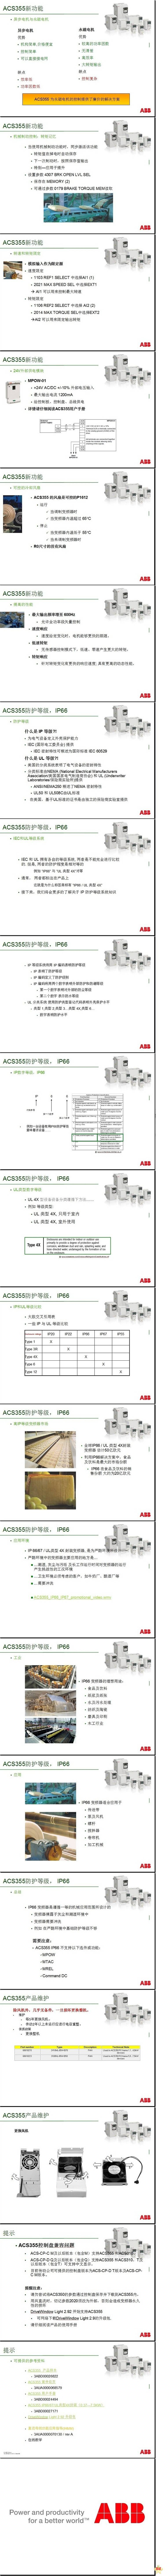 ABB 变频器 机械传动 单相 220V ACS355-01E-04A7-2 变频器,机械传动,微型传动,ACS355,ABB